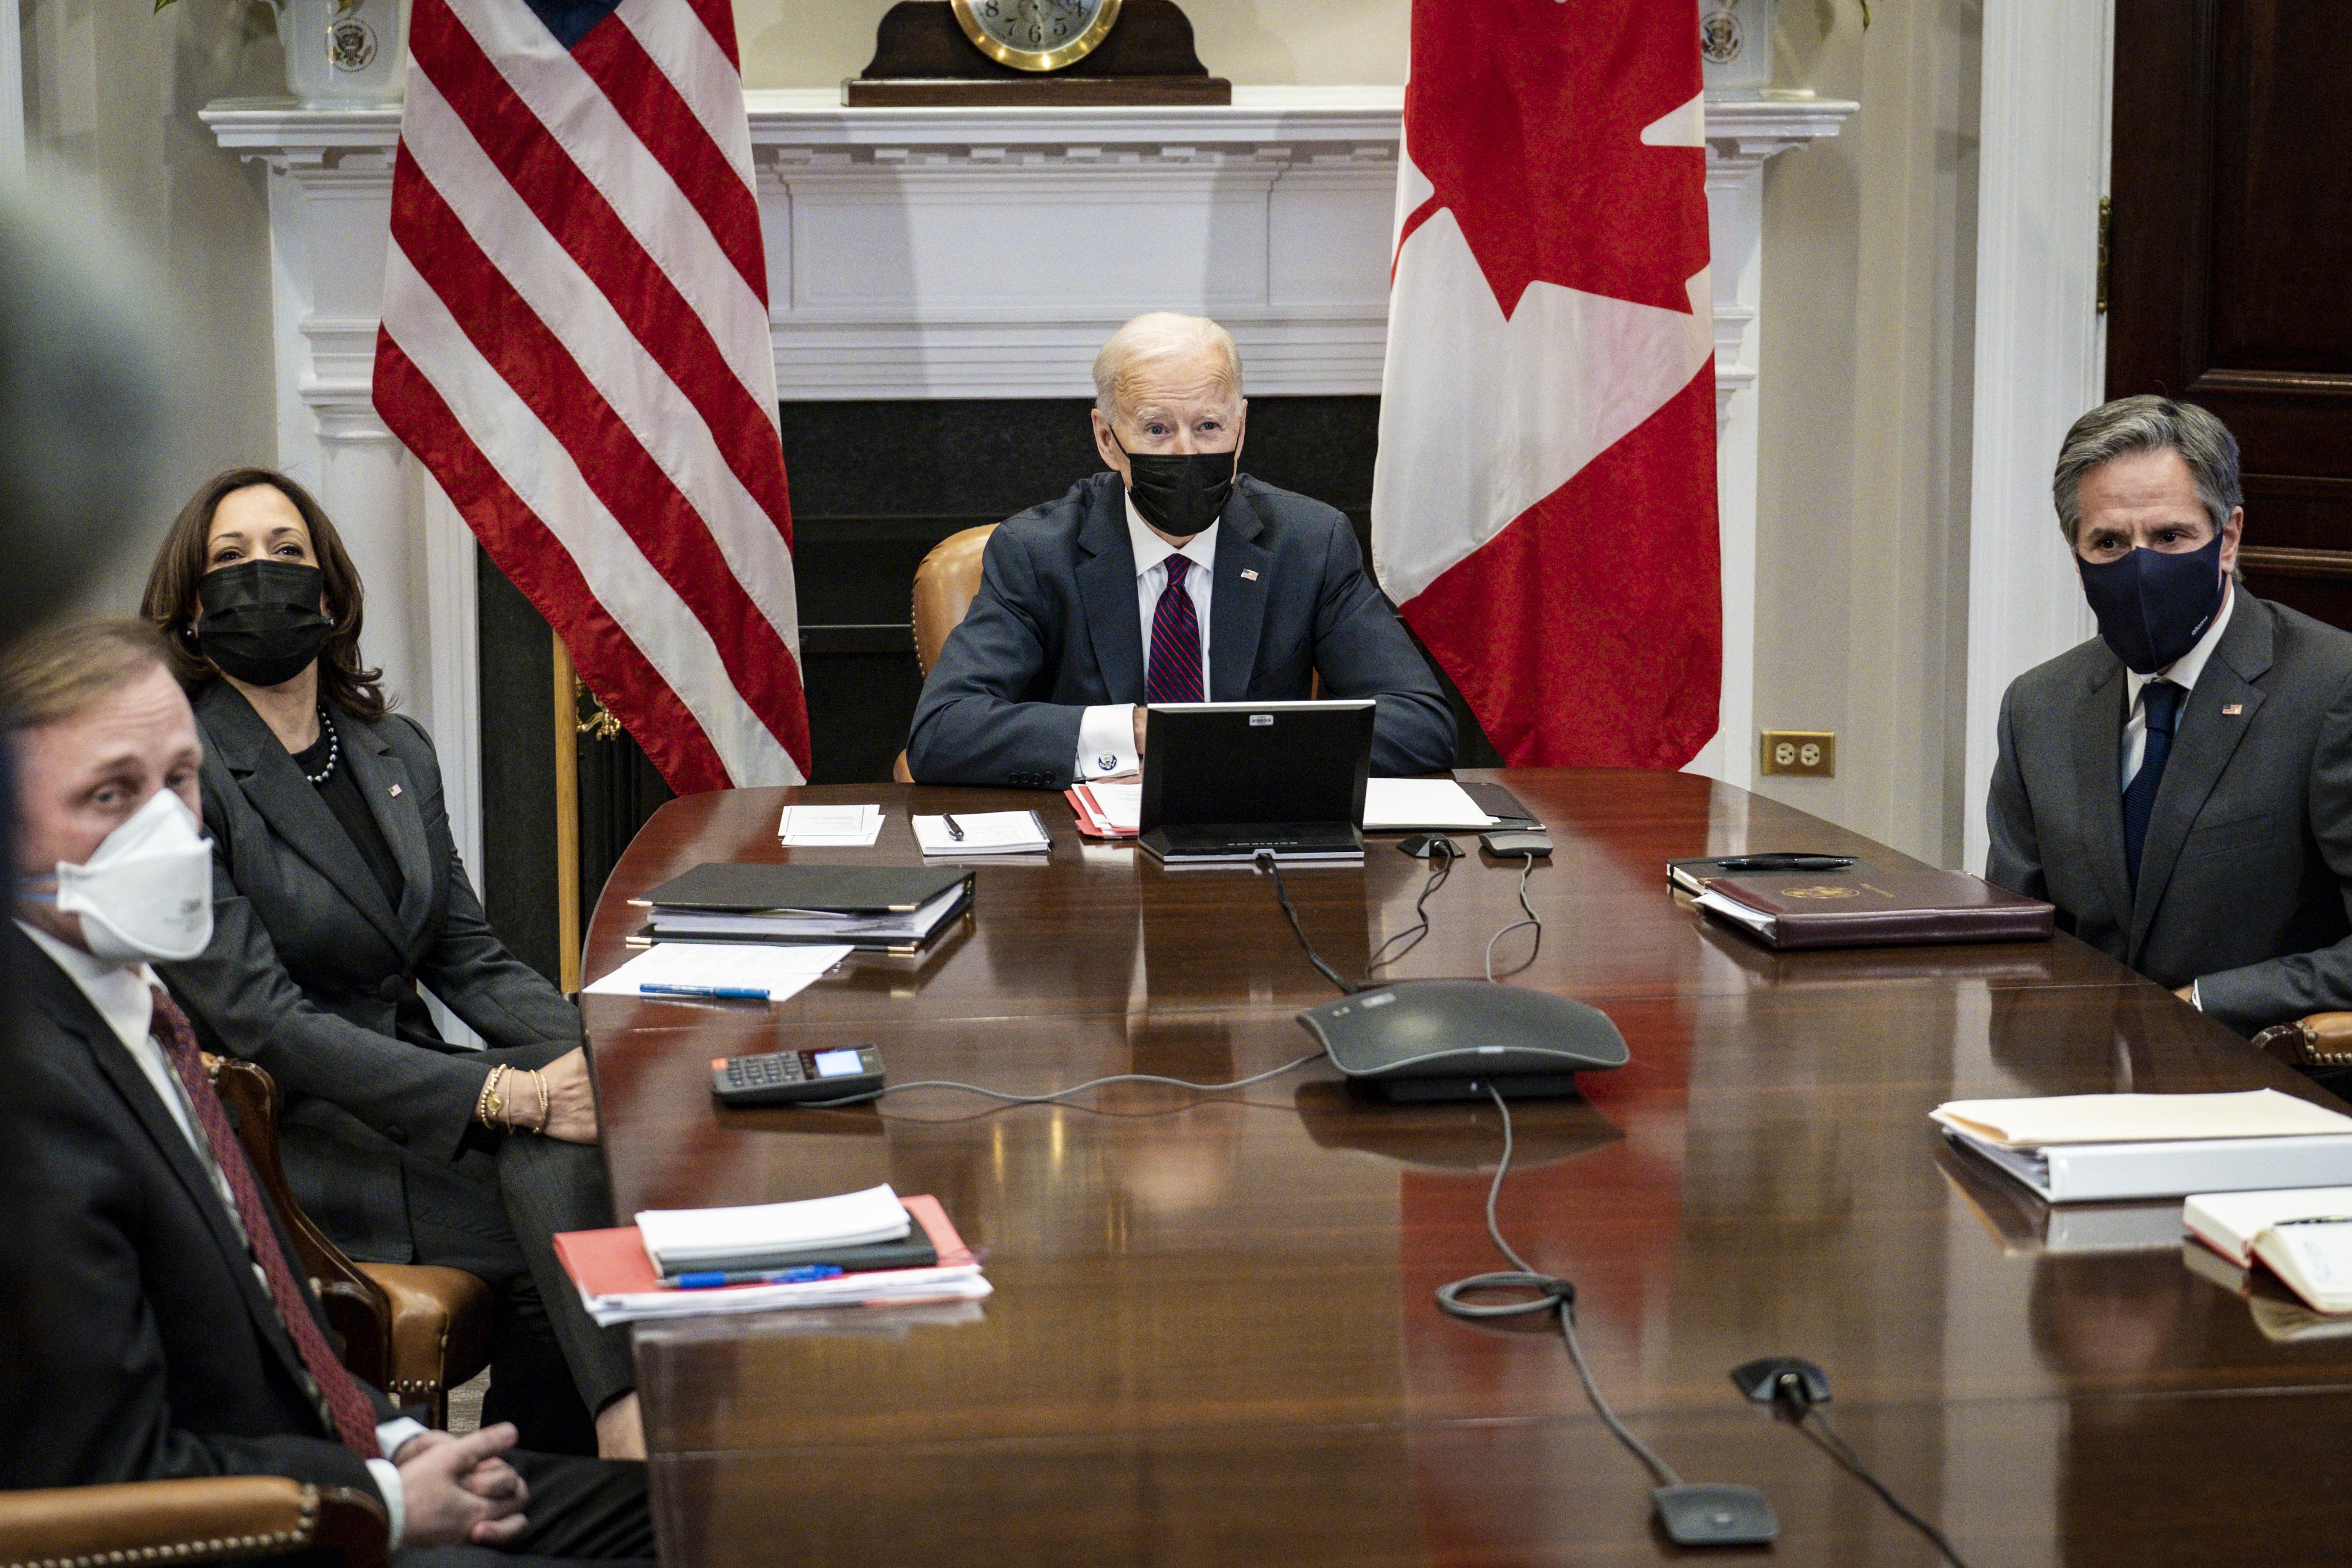 Sullivan, Harris, Biden, and Blinken seated around a conference table, wearing masks